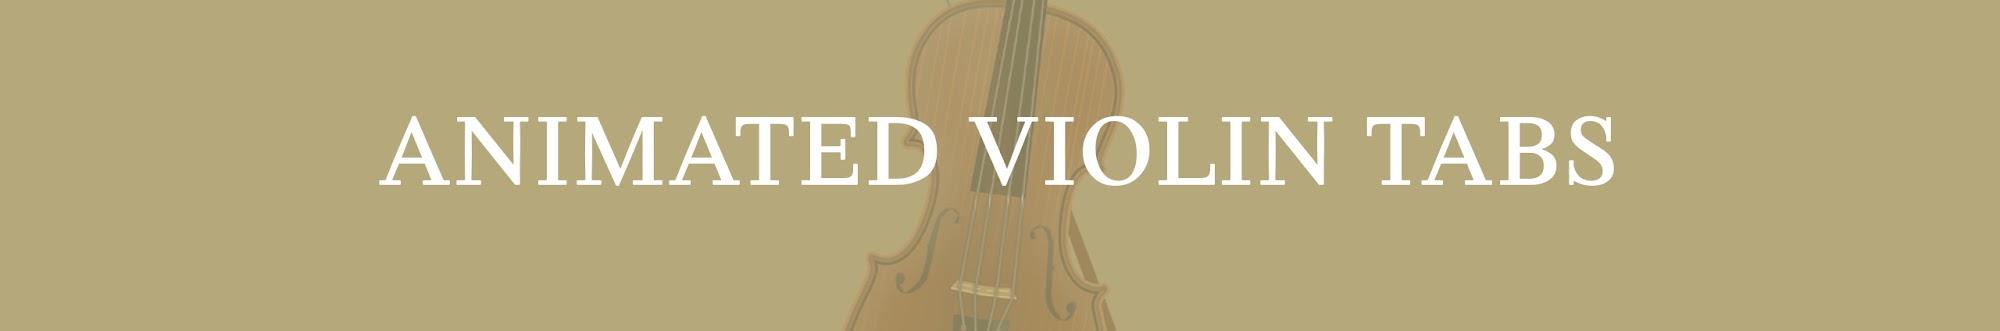 Animated Violin Tabs